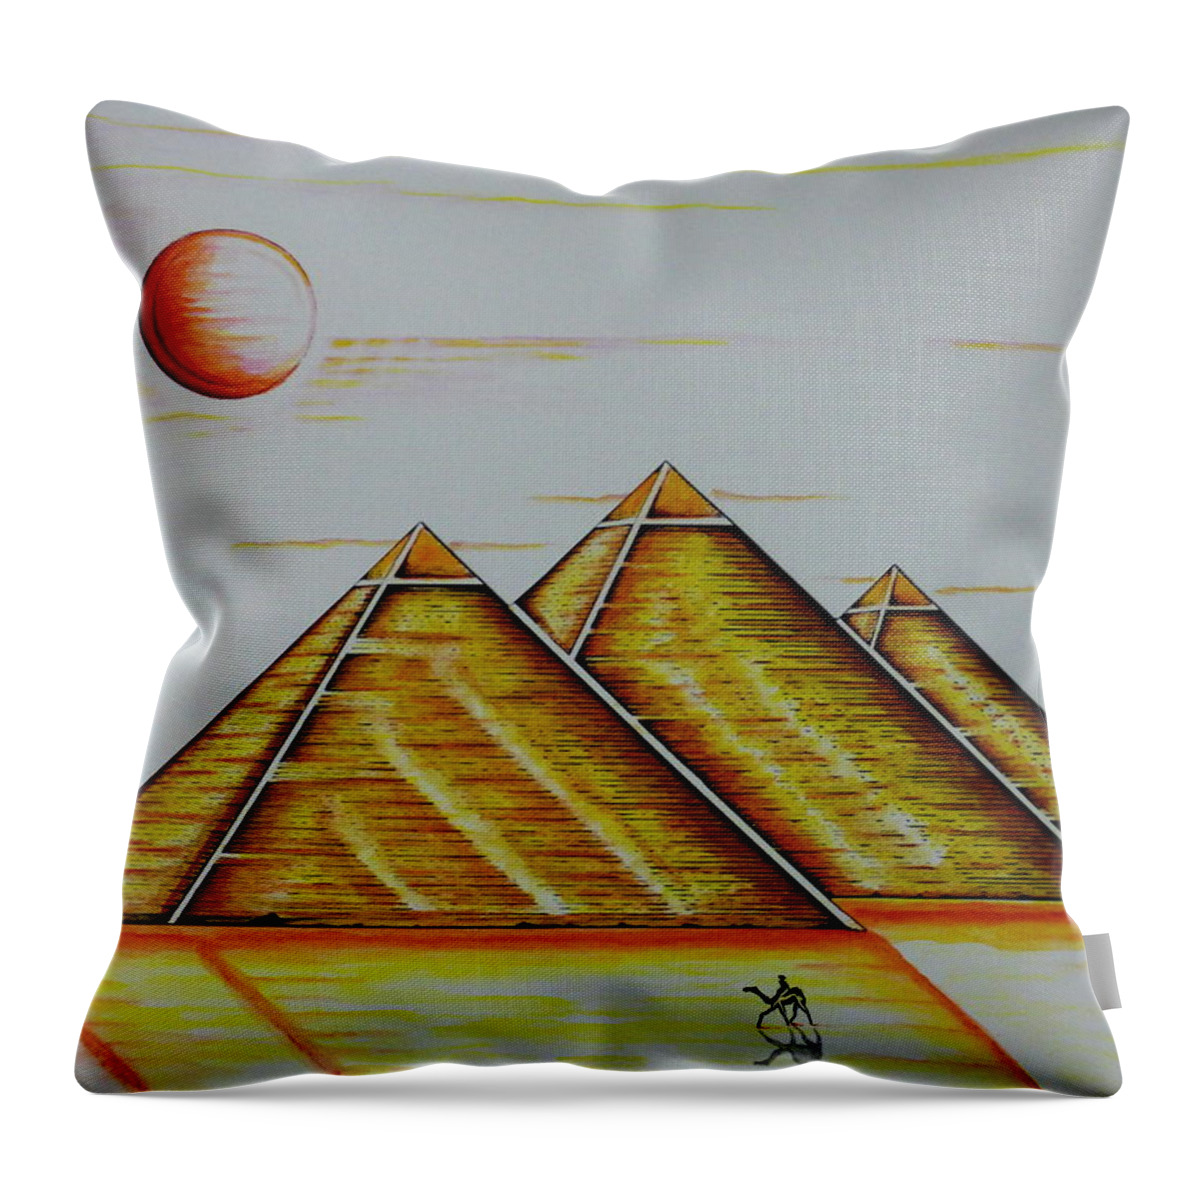 Pyramid Throw Pillow featuring the mixed media Pharaoh's Moon by Kem Himelright